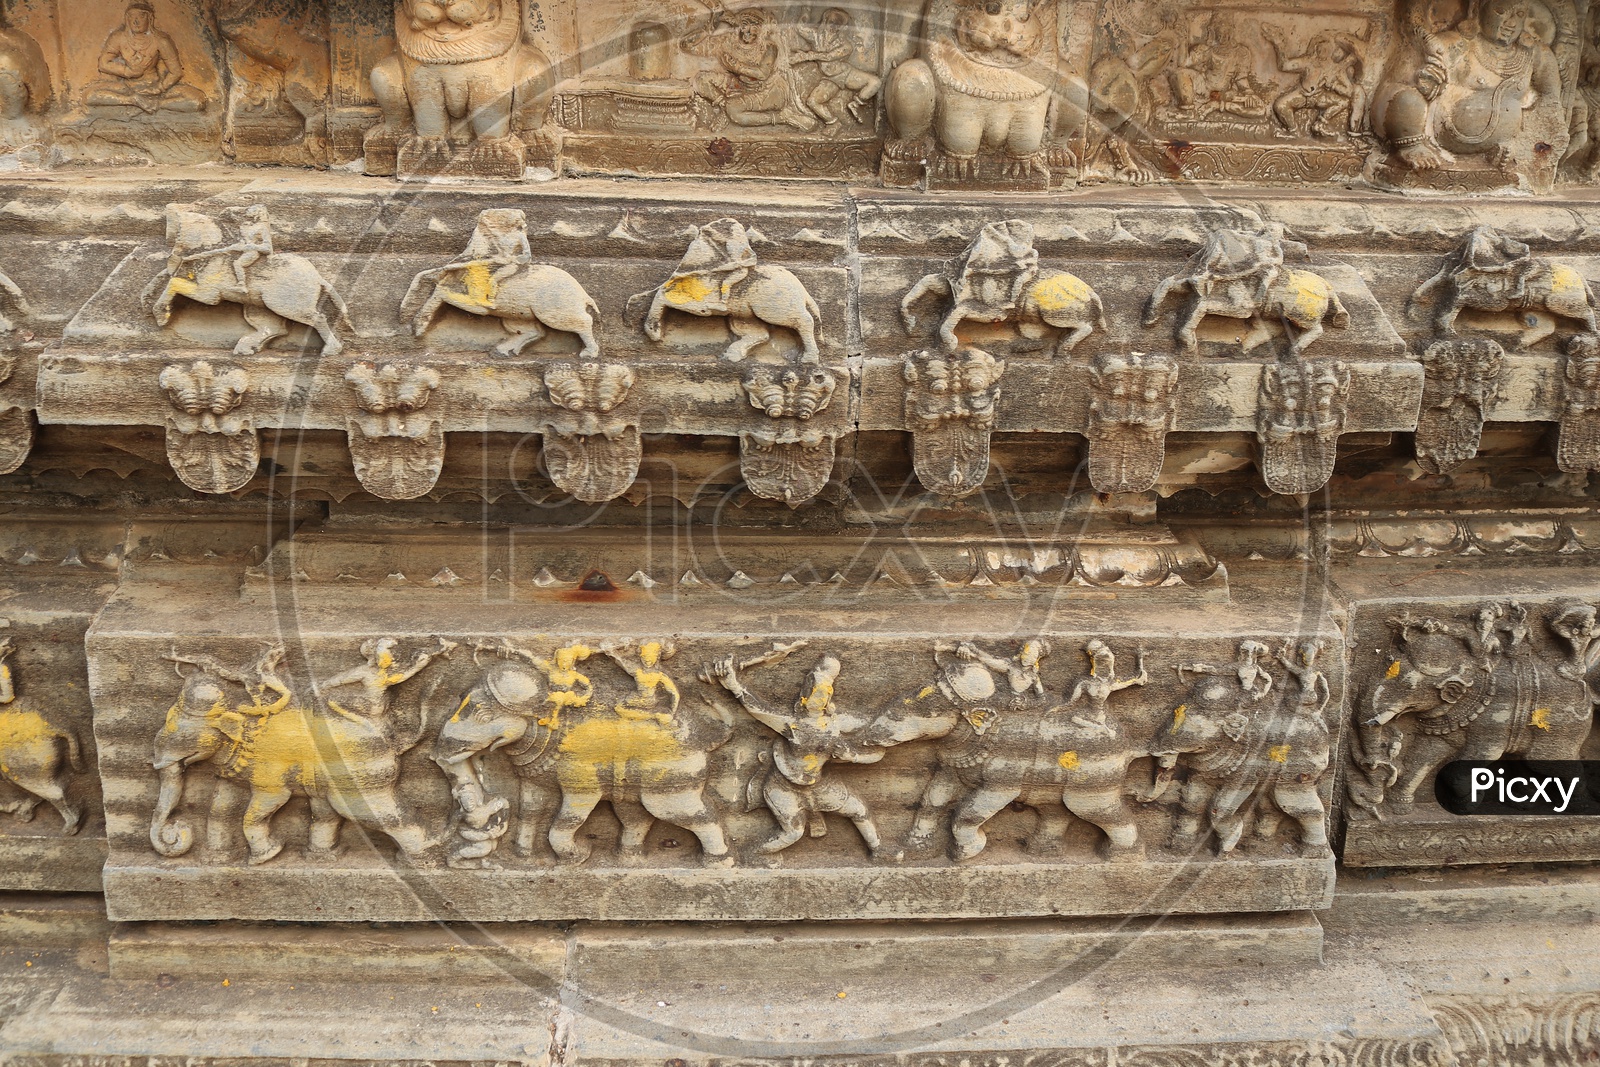 Architecture at Pushpagiri temple